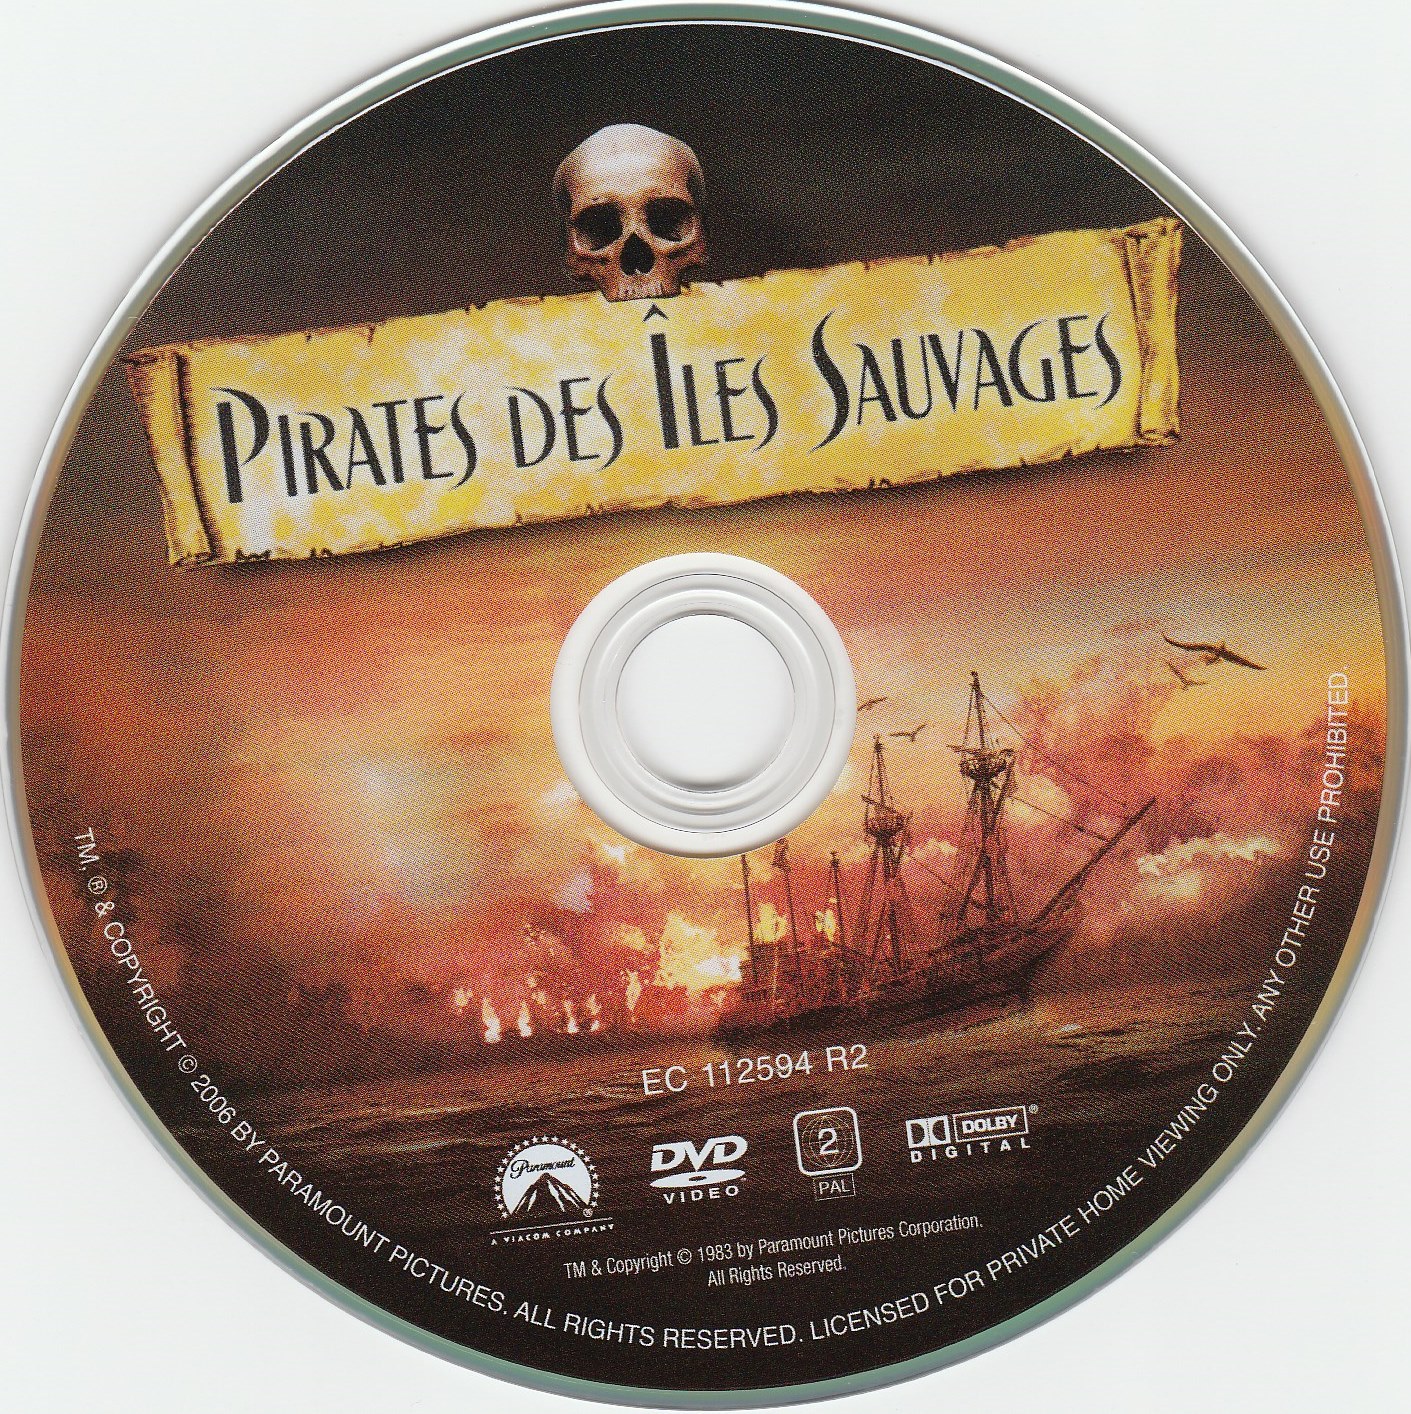 Pirates des iles sauvages